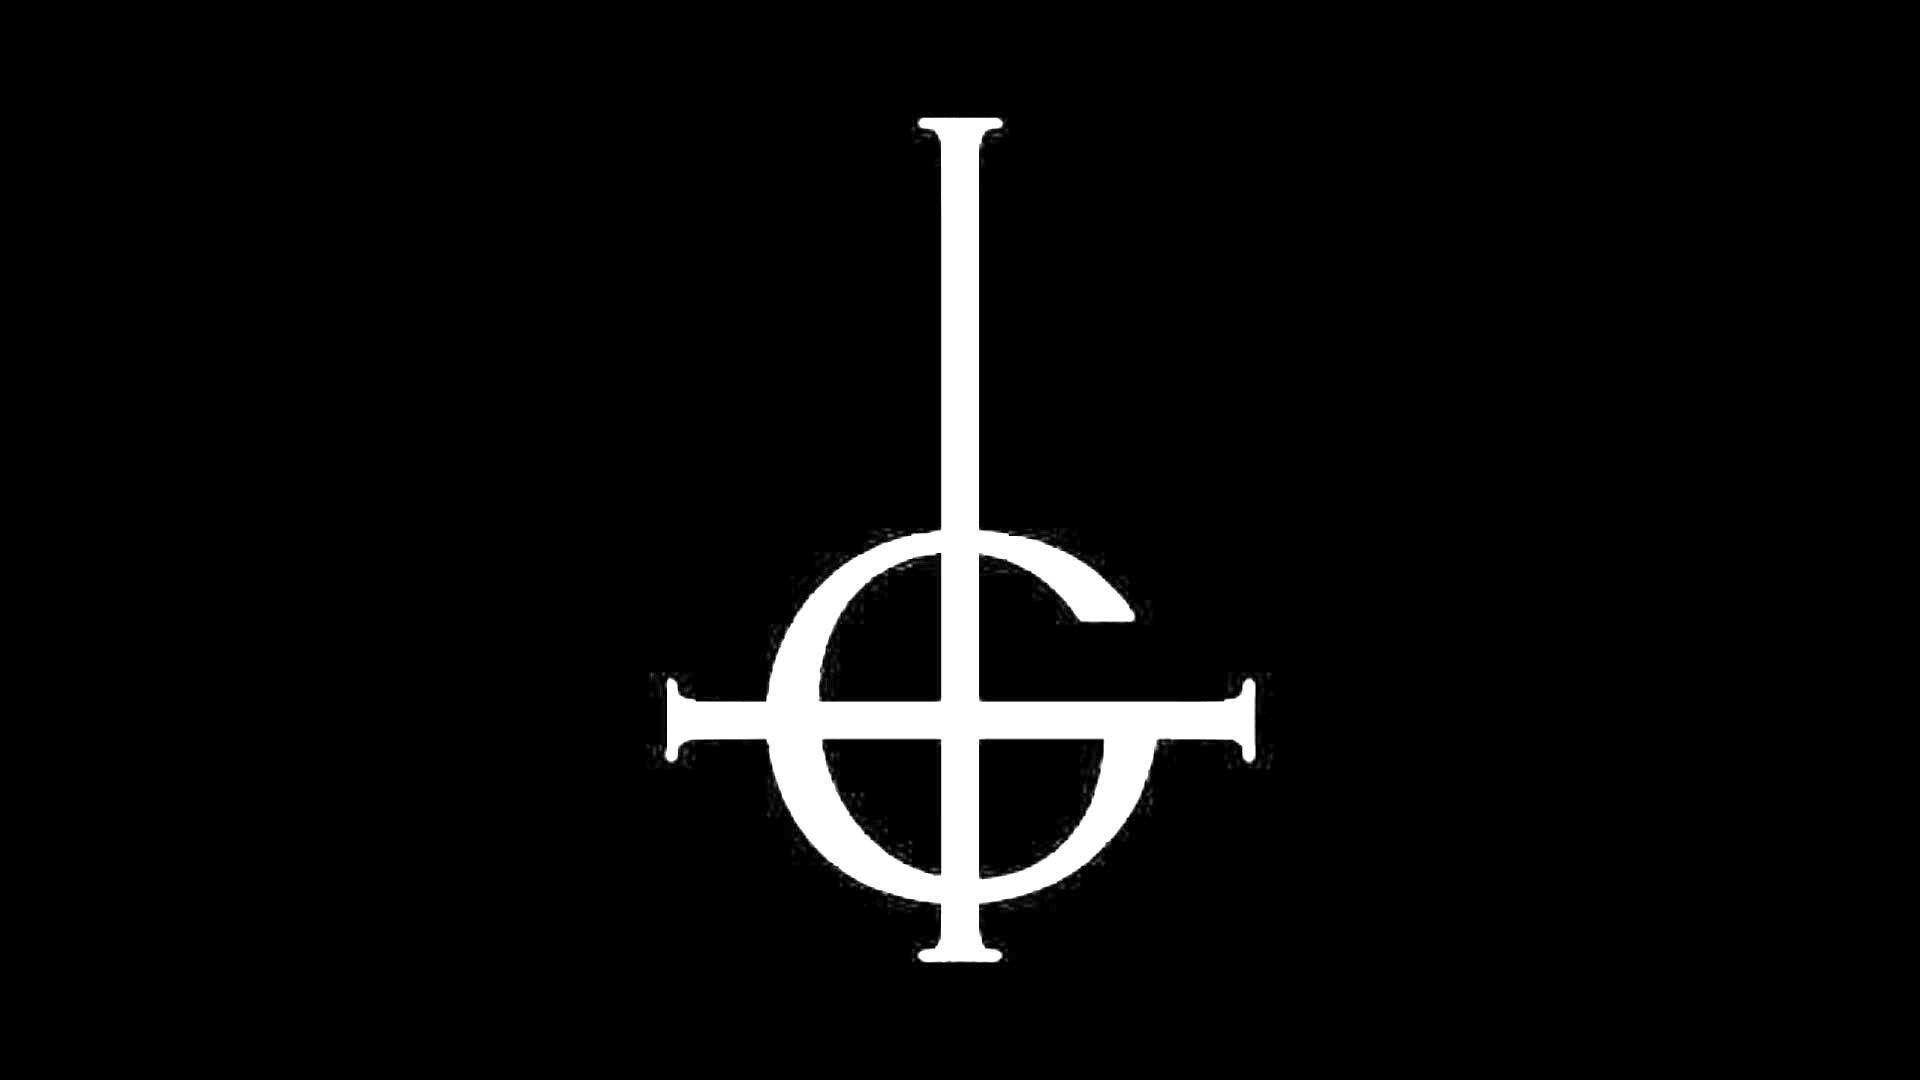 Ghost Band, Ghost logo, Haunting symbol, Dark aesthetic, 1920x1080 Full HD Desktop